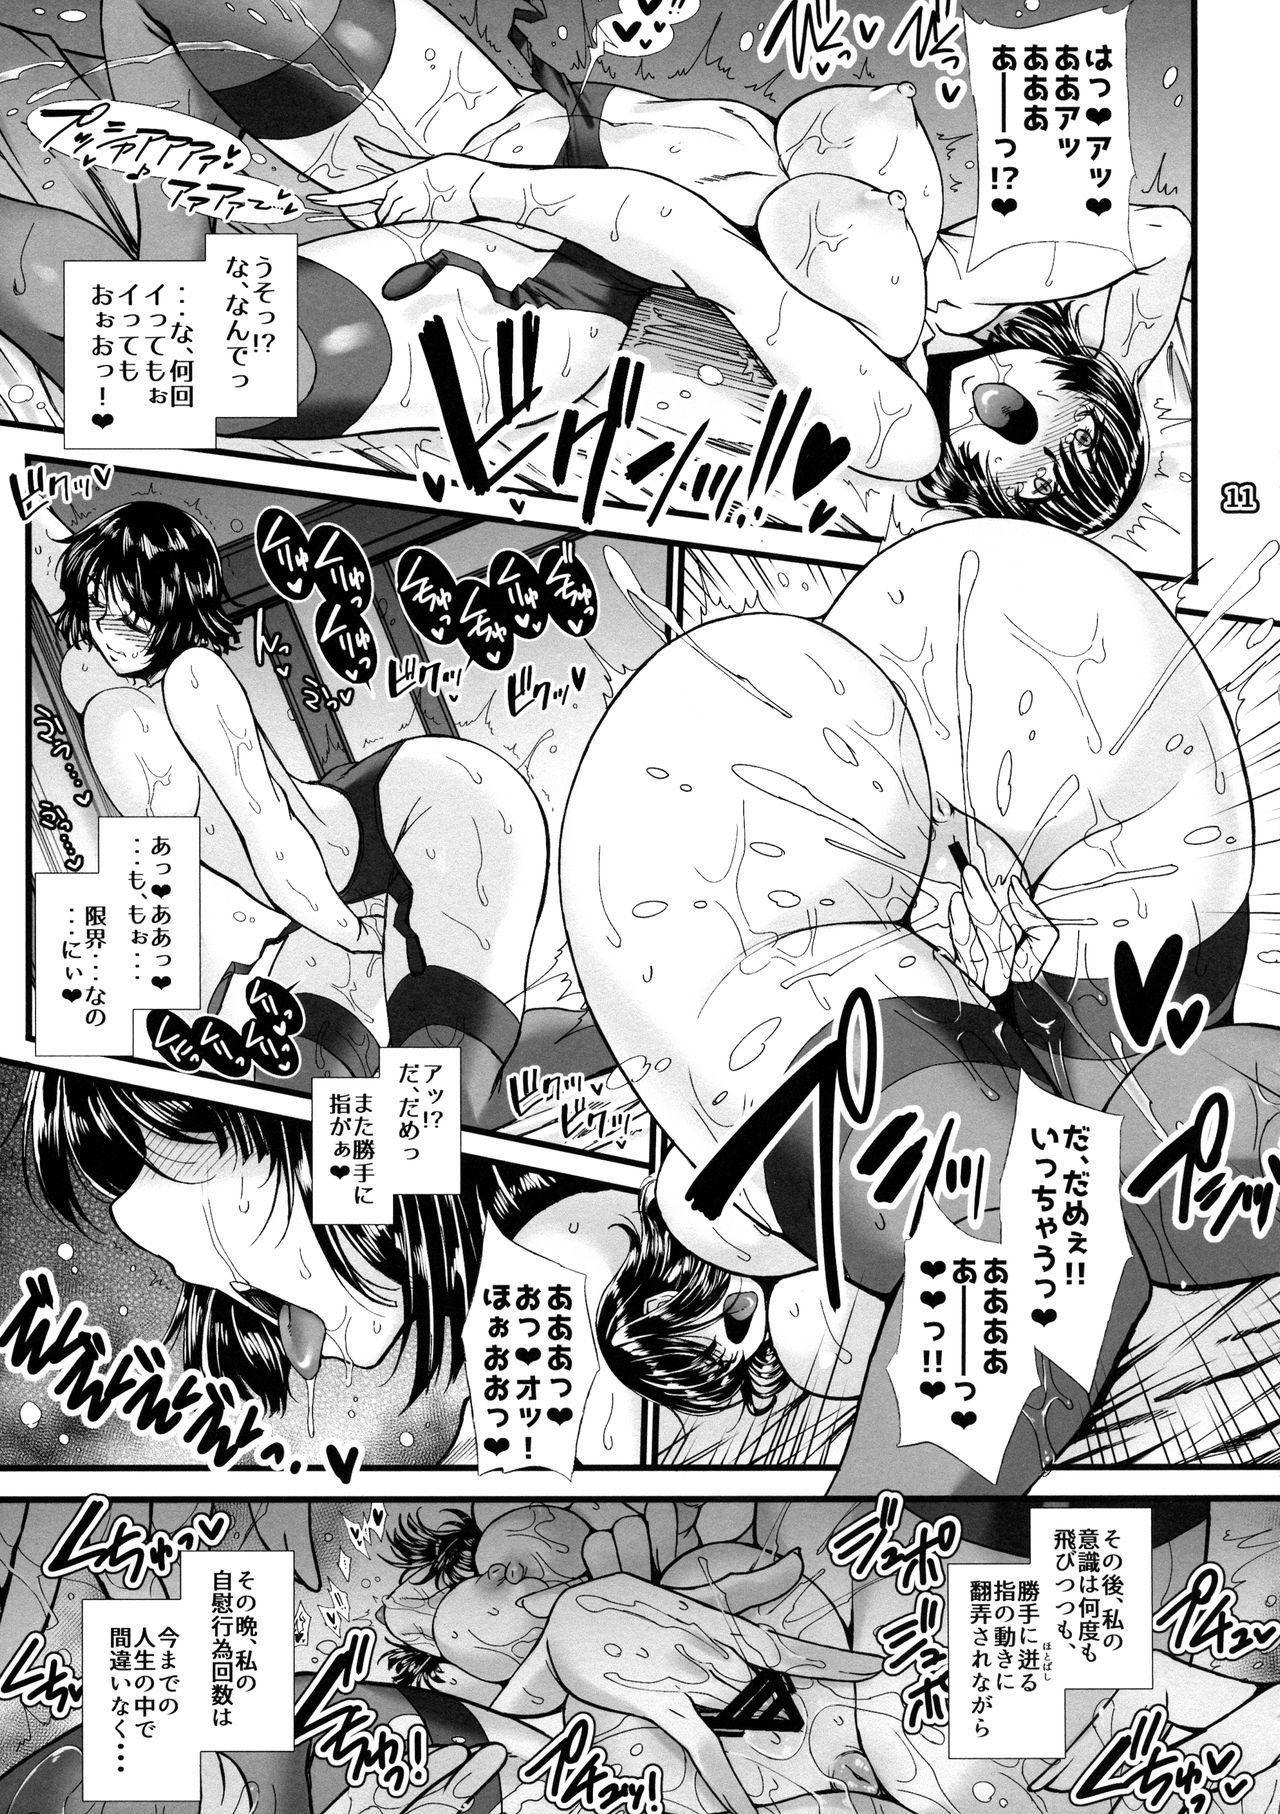 Safadinha Fubuki Ranshin - One punch man Tanga - Page 11